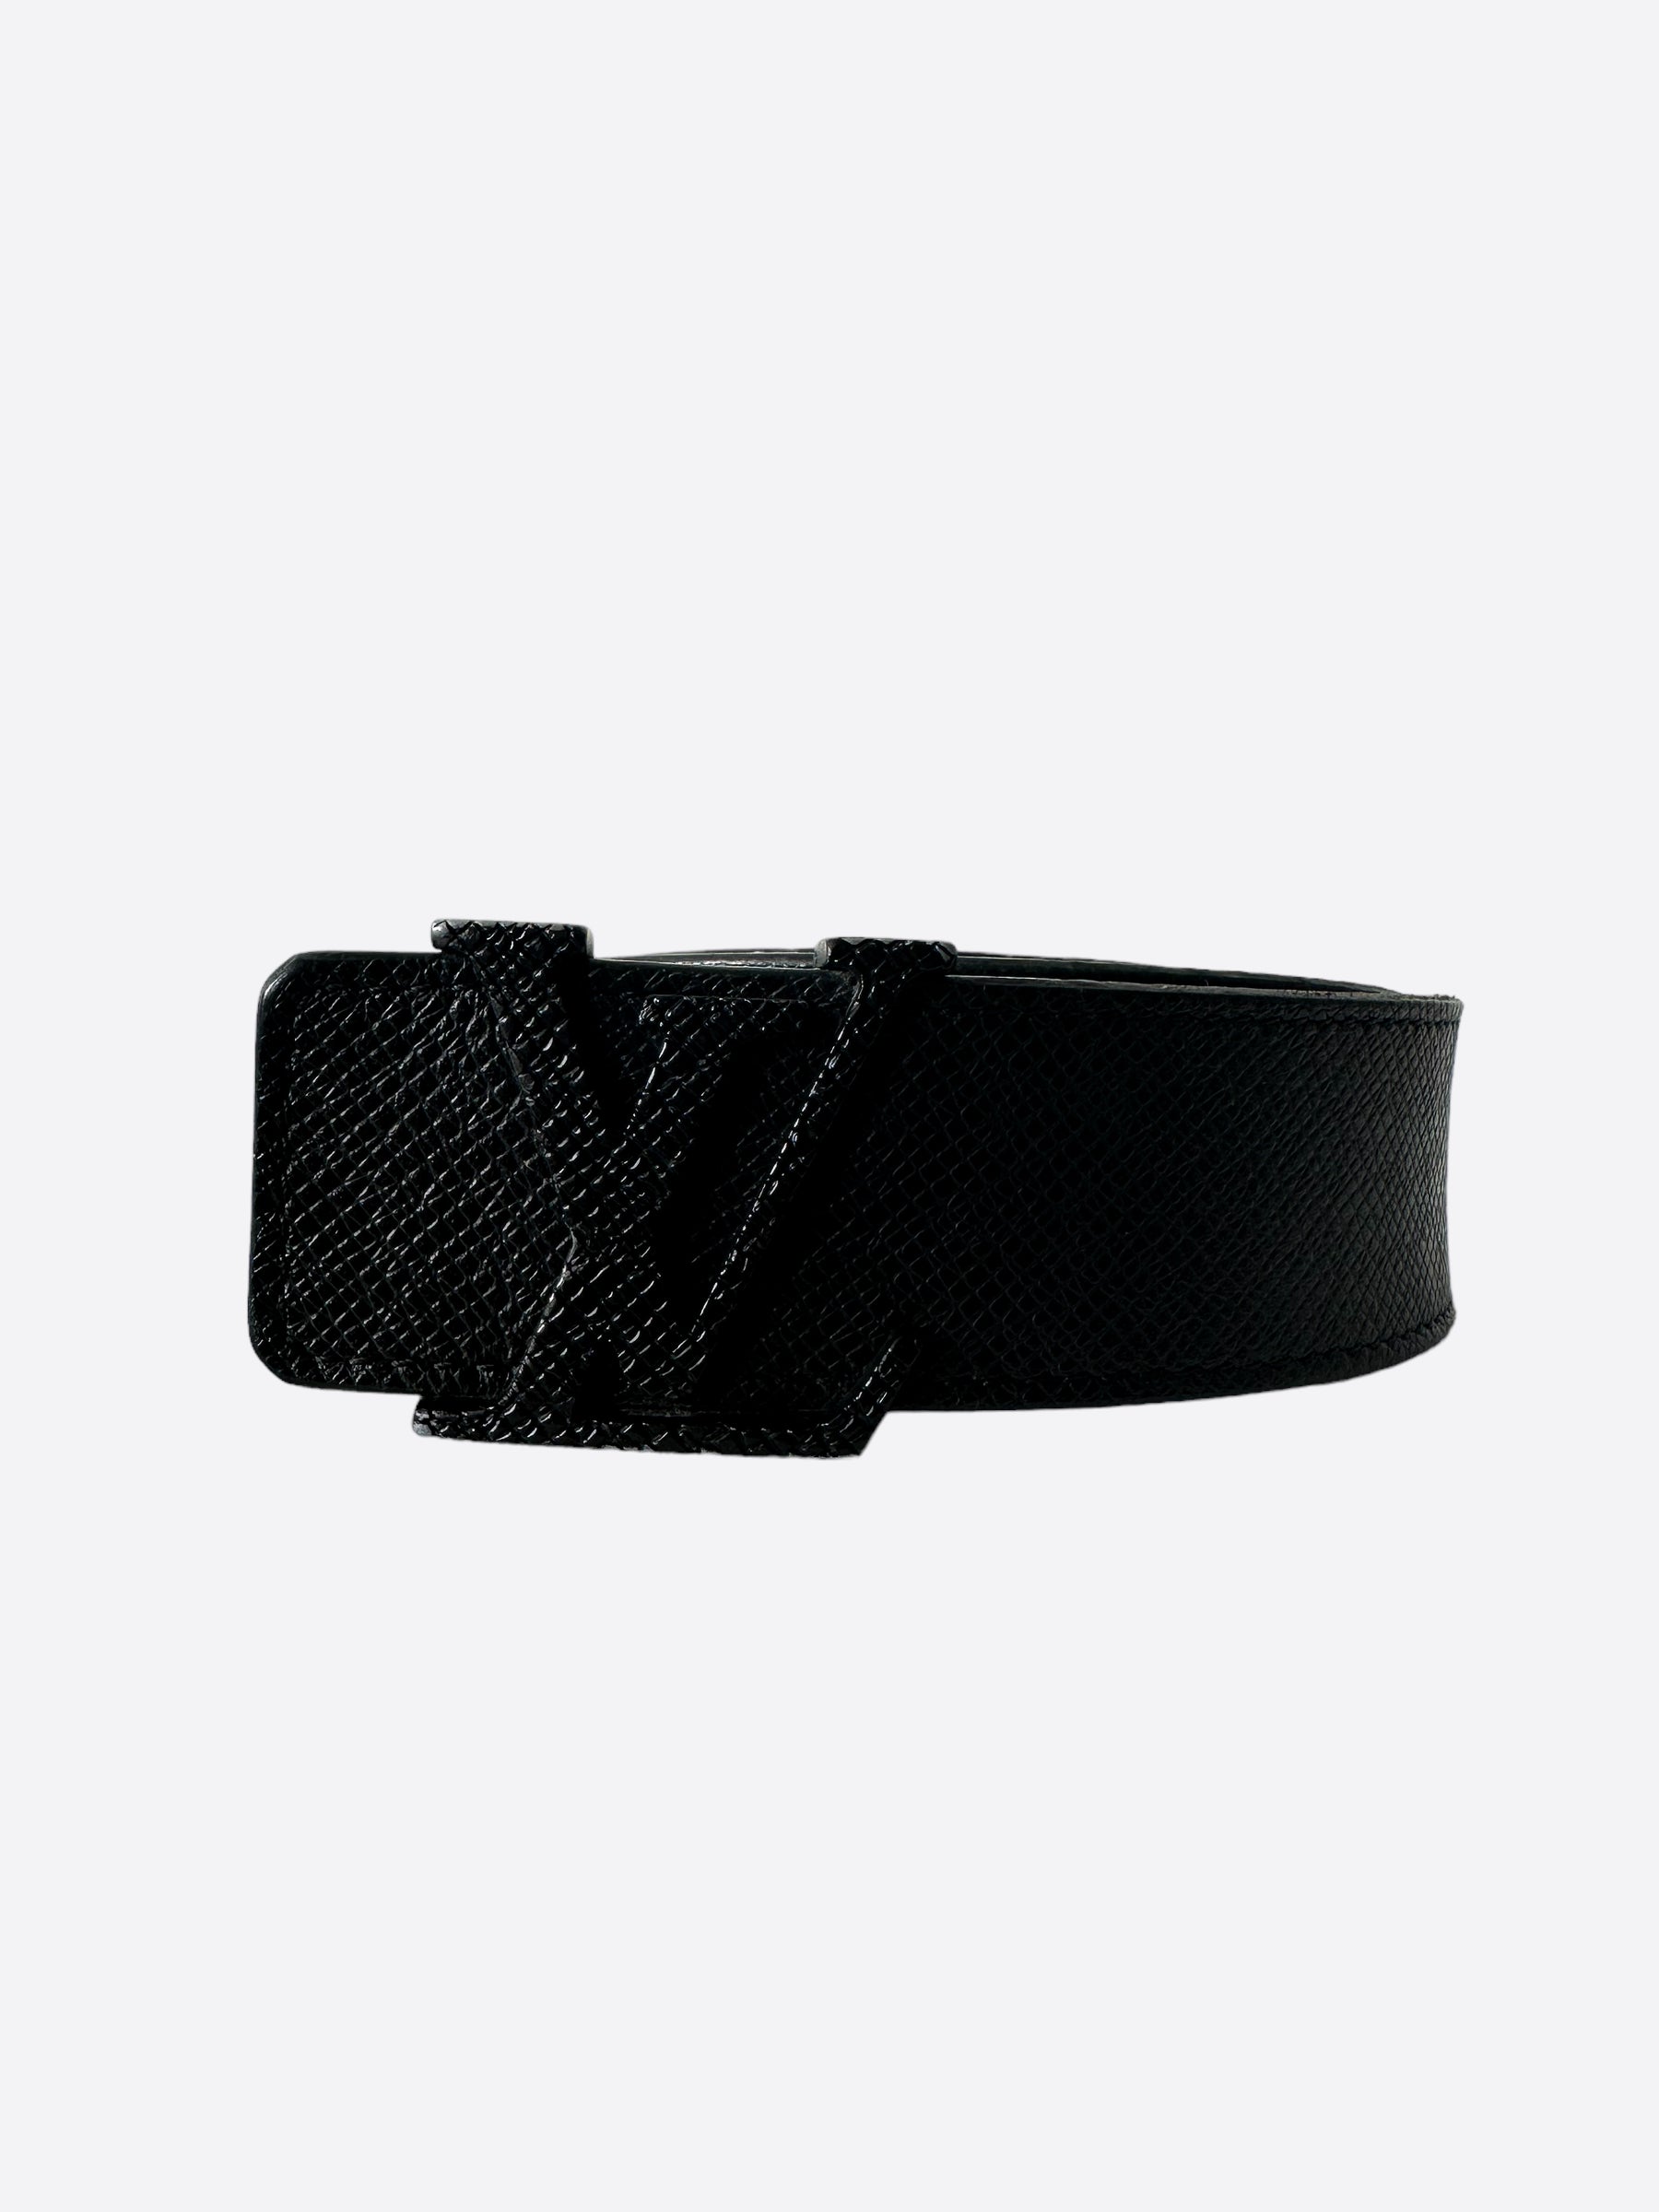 grey and black lv belt